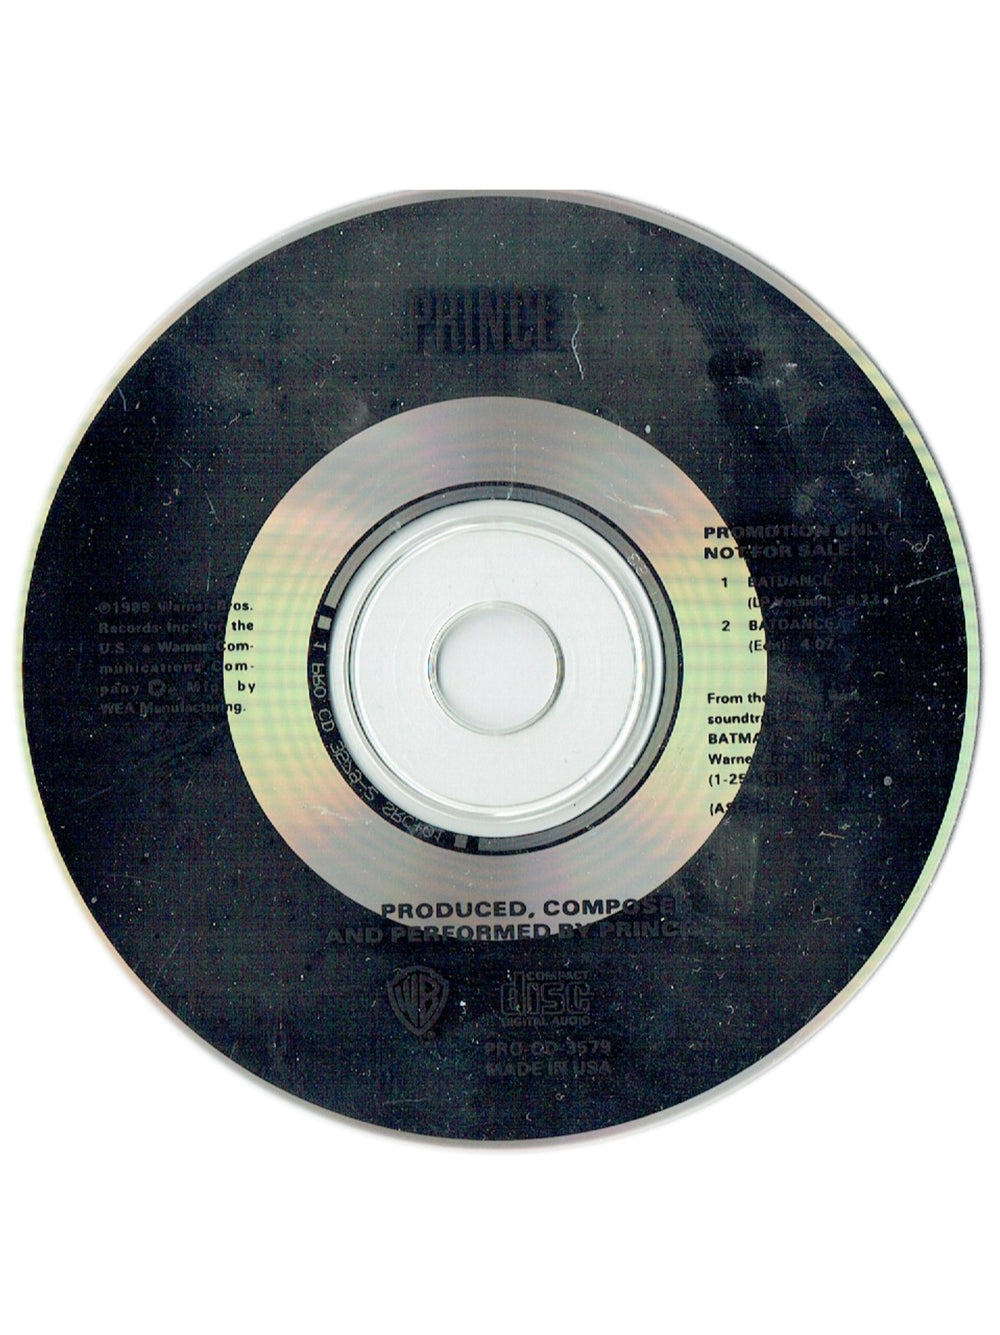 Prince – BATDANCE CD Single Promo USA Preloved: 1989*